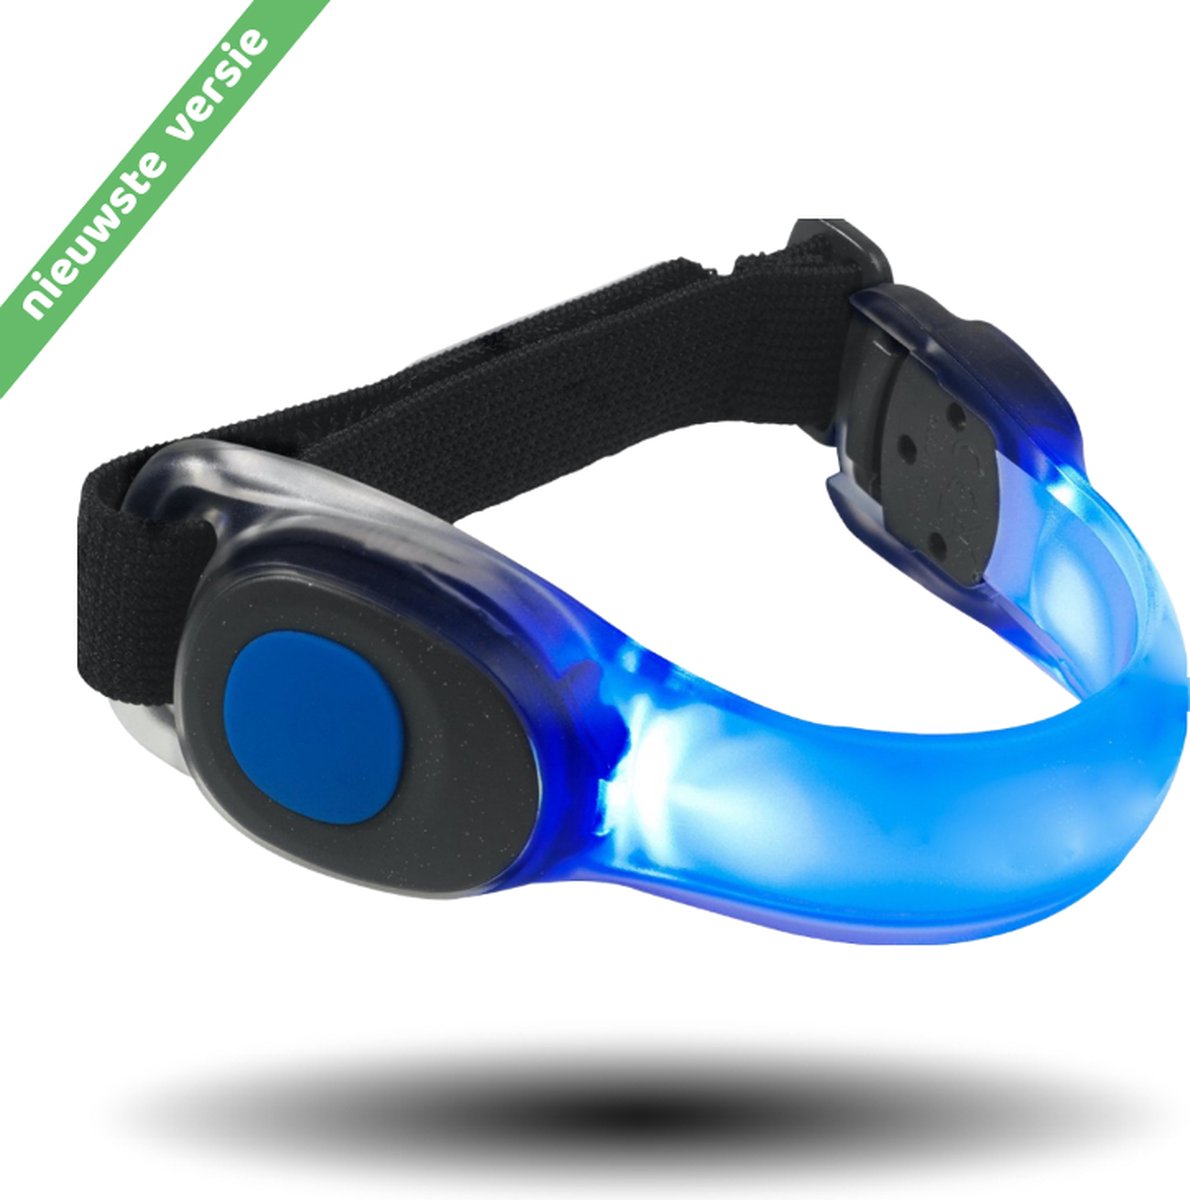 InVincer® - Hardloop verlichting - Hardloop lampje Blauw incl batterijen - LED glow armband verlichting - Running light - safety sport armband - Lampje Hardlopen - Reflecterende armband - Water resistant - Kleur: Blauw